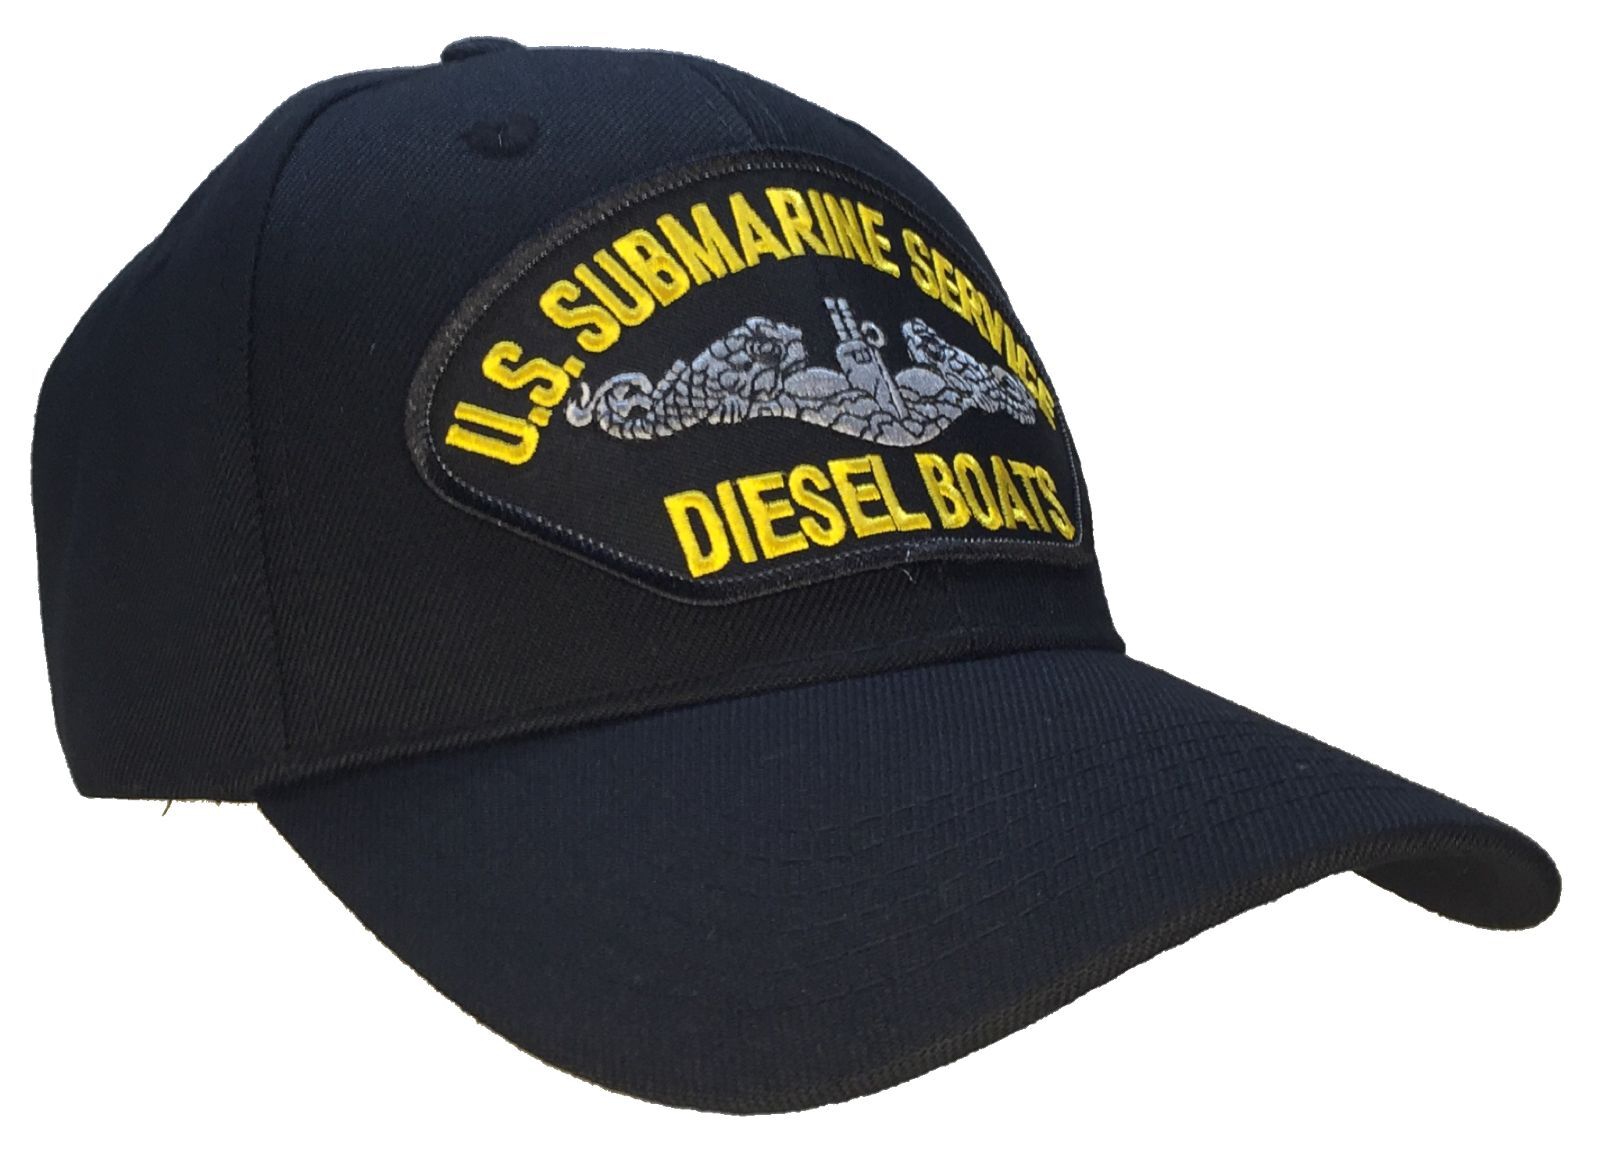 U.S. Navy Submarine Service Veteran Hat DIESEL BOATS Black Ball Cap